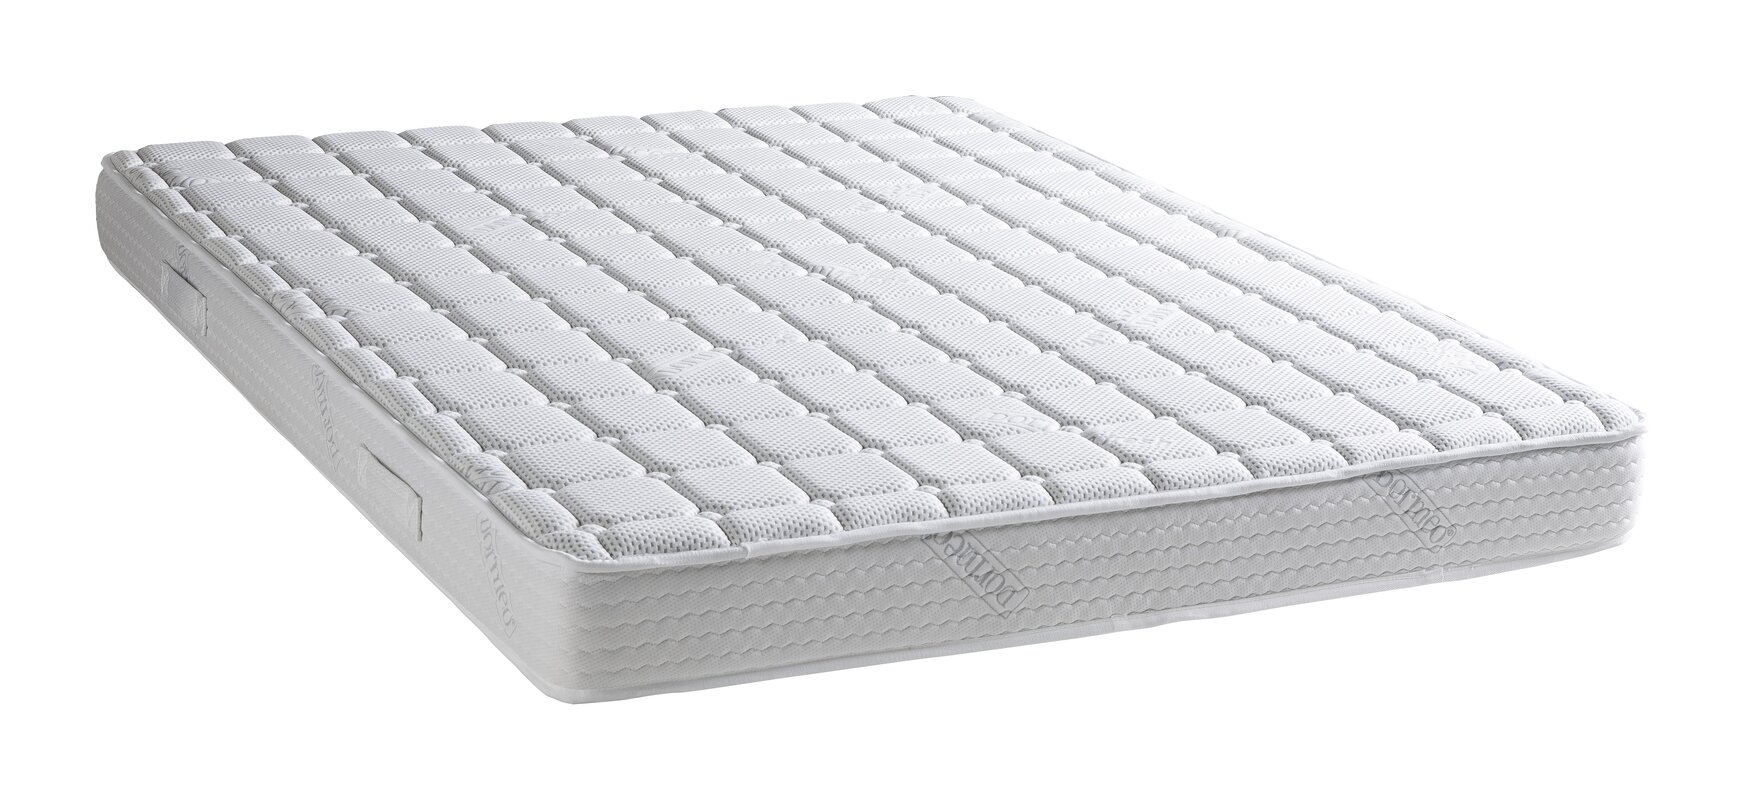 dormeo fresh memory foam mattress